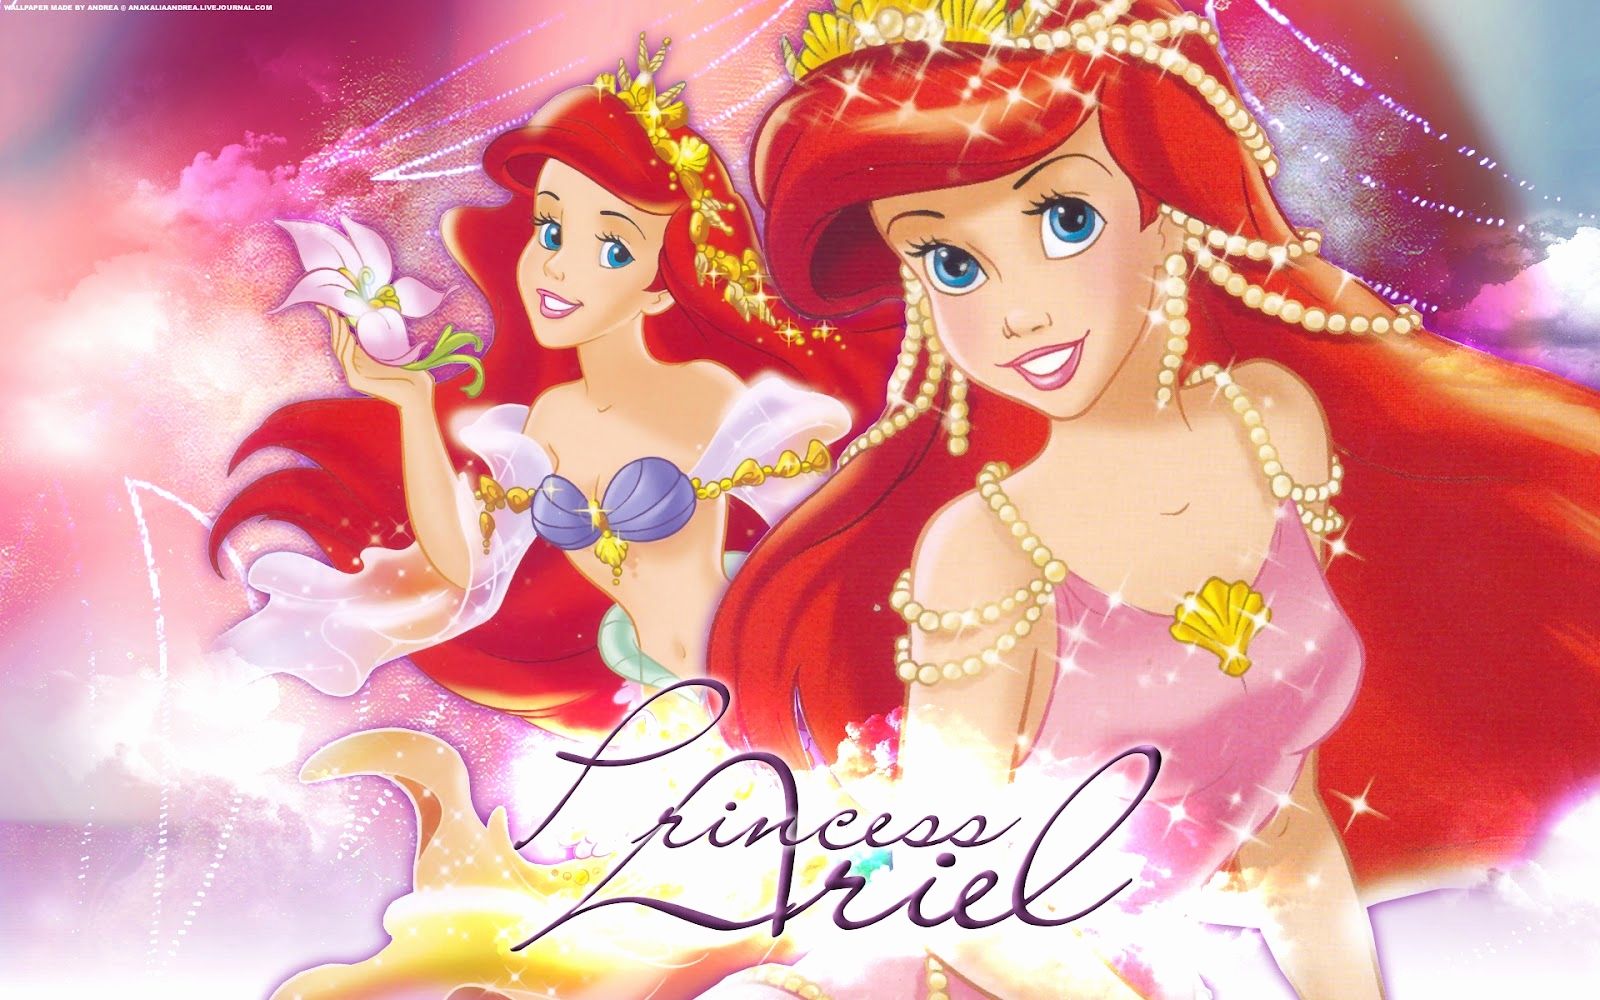 The Little Mermaid Wallpaper Elegant 11 Beautifull Litle Mermaid Disney Princess Ariel Characters This Month of The Hudson